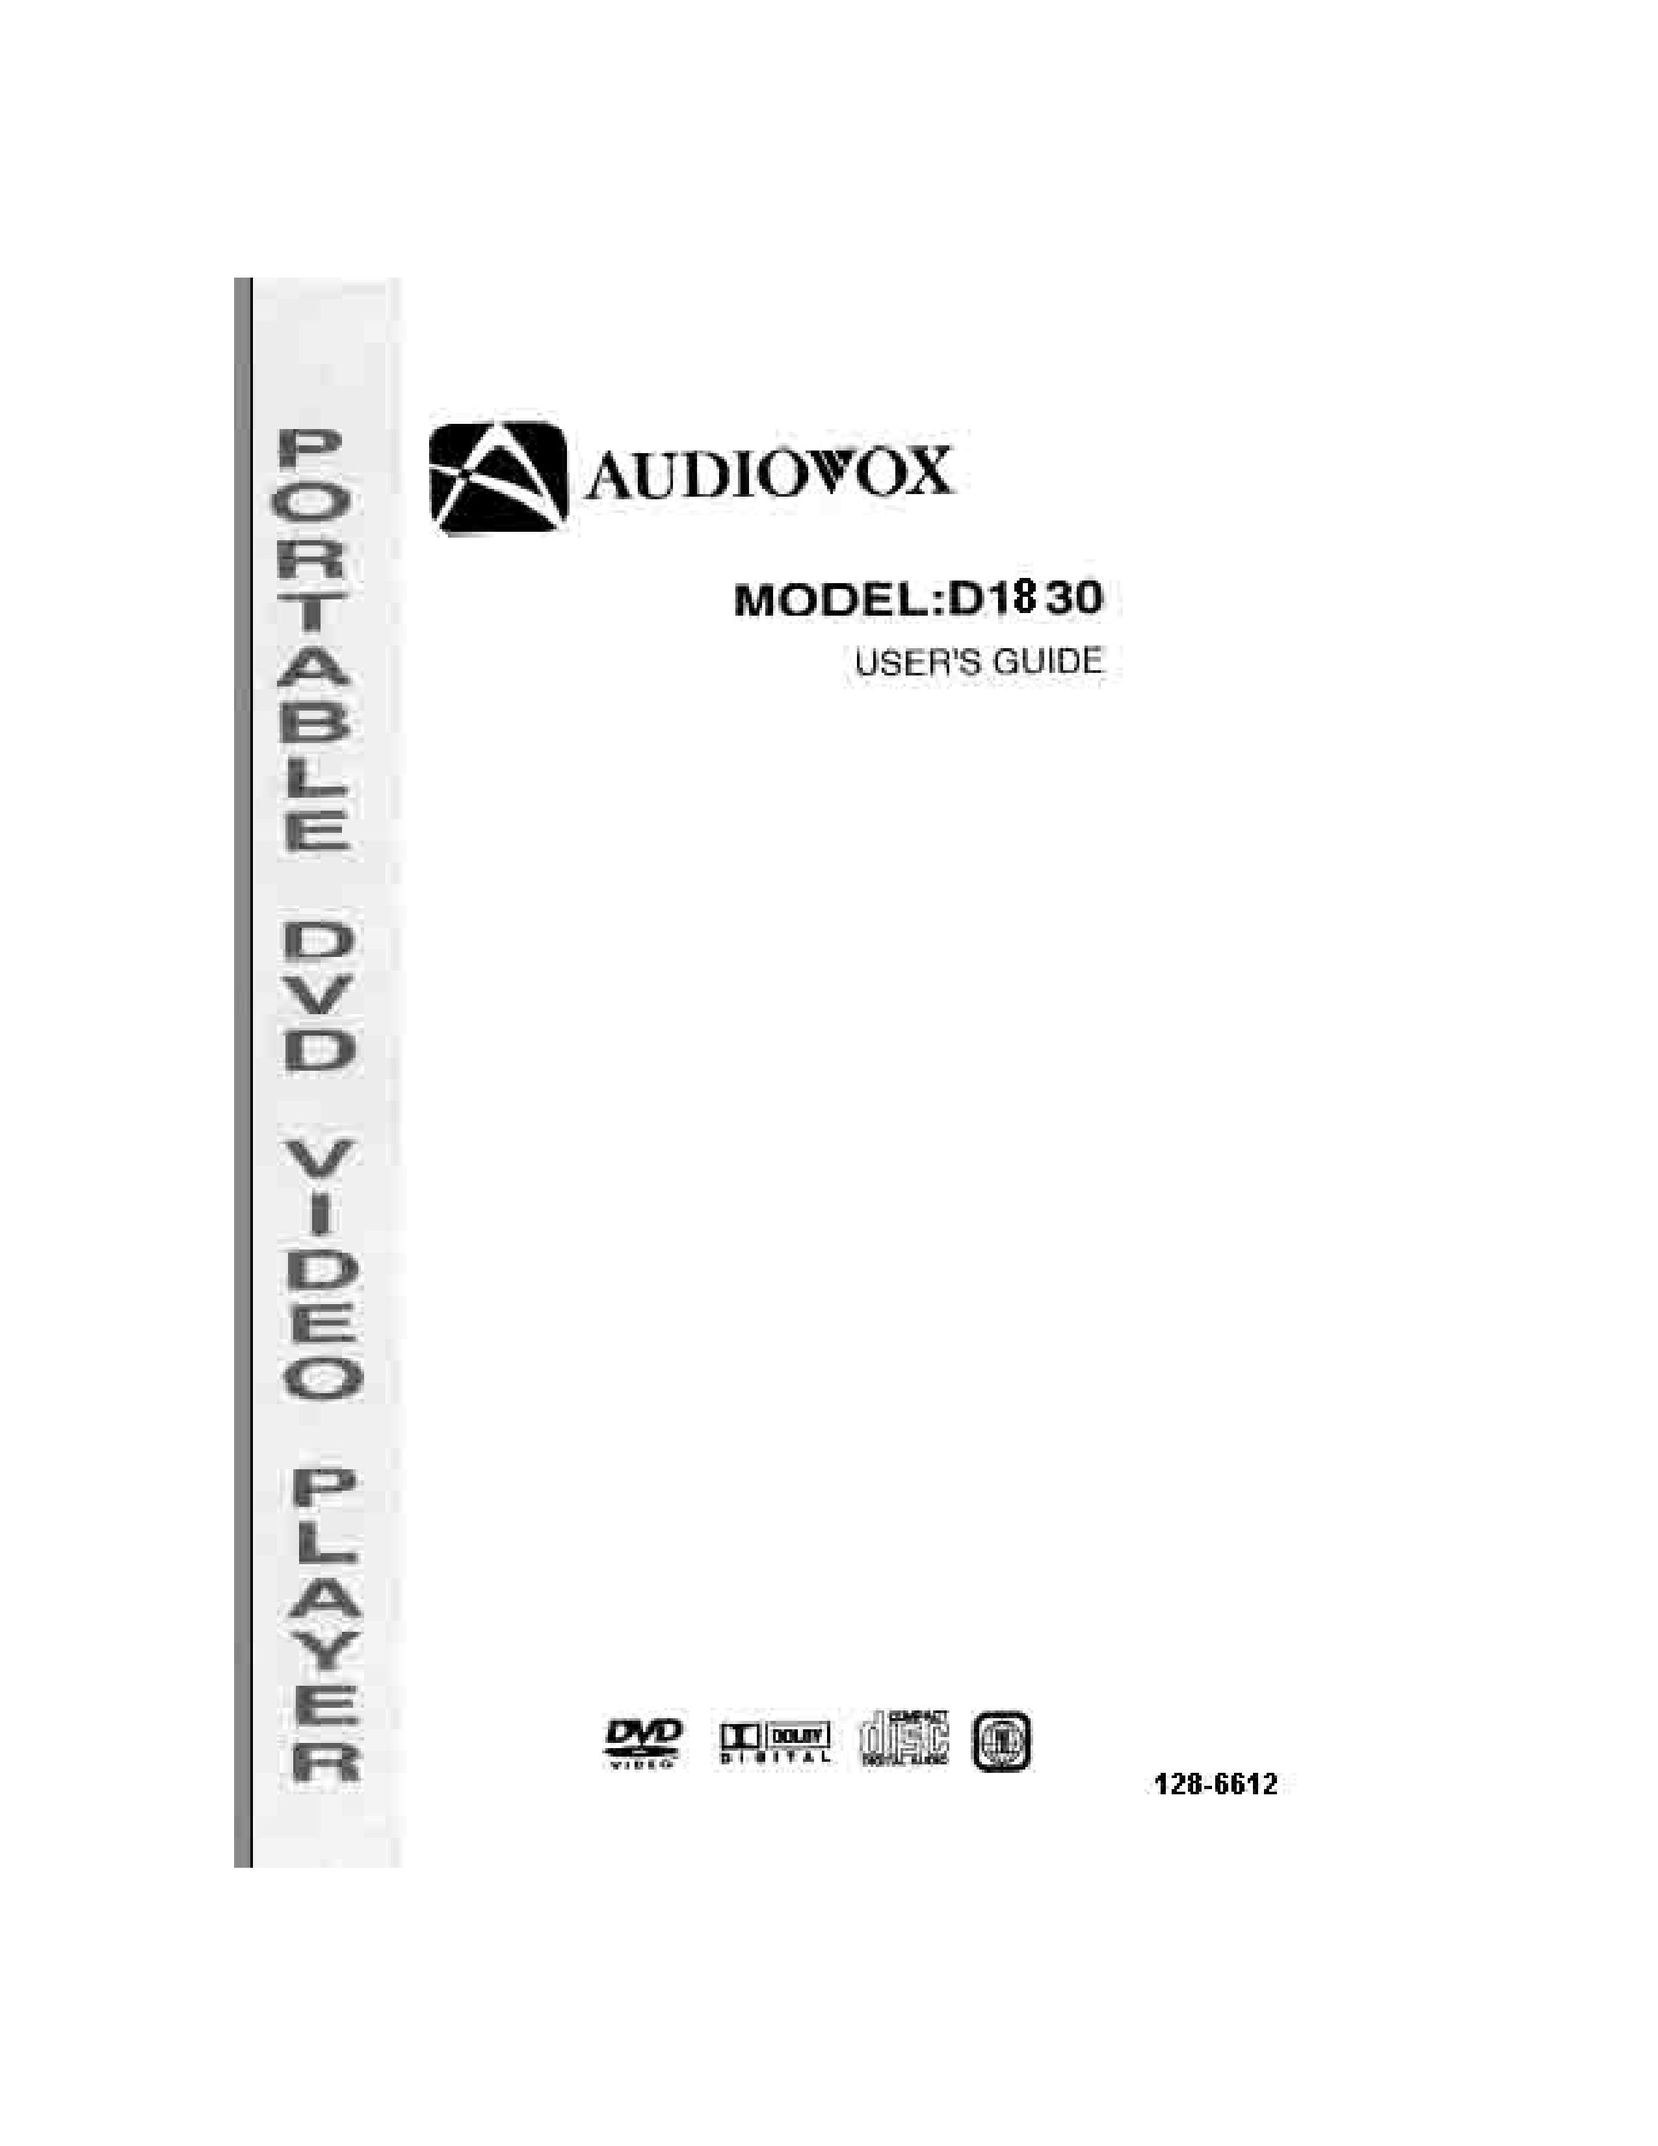 Audiovox D1830 DVD Player User Manual